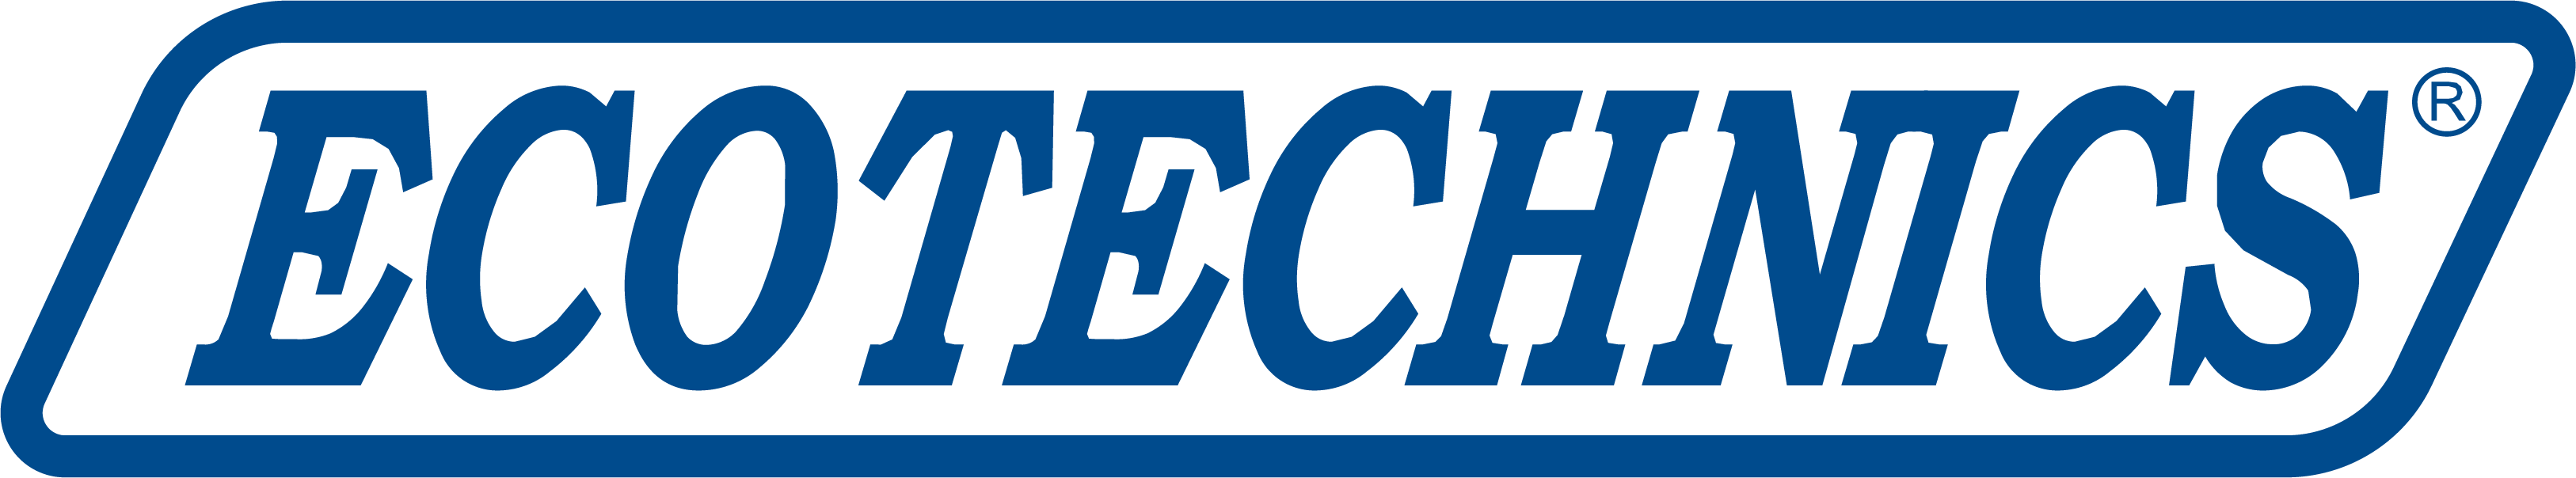 Ecotechnics Brand Logo